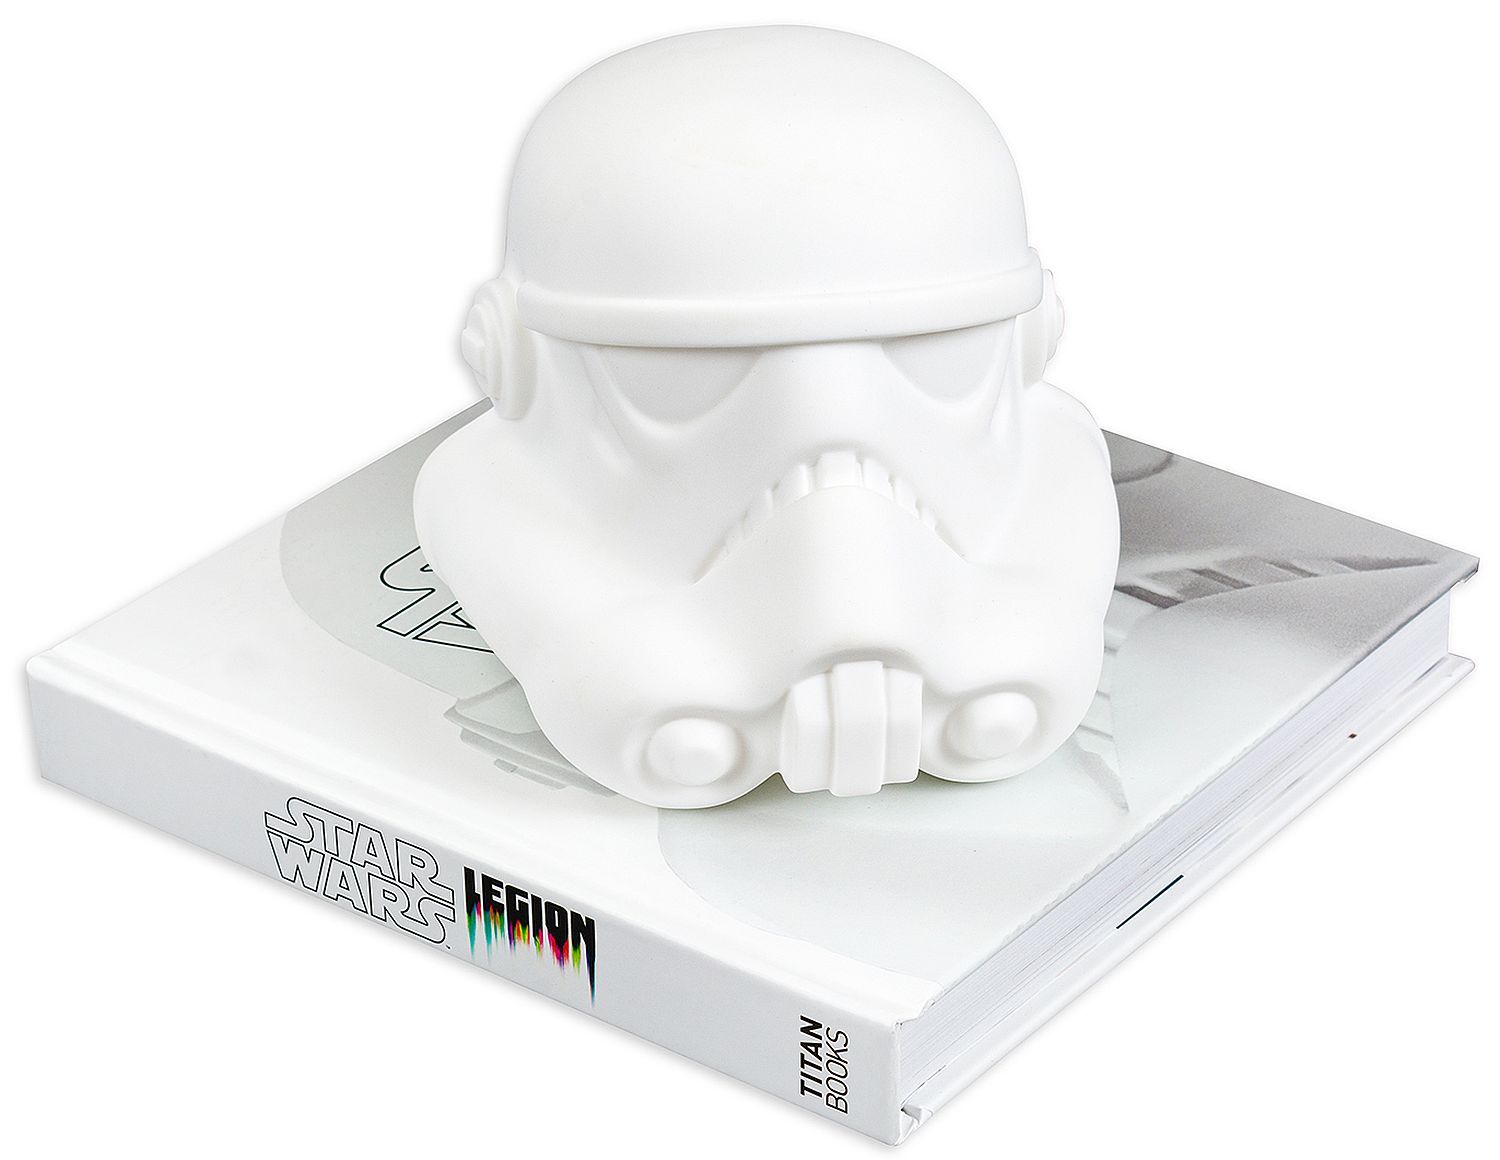 Star Wars: Stormtrooper Helmet and Book Set